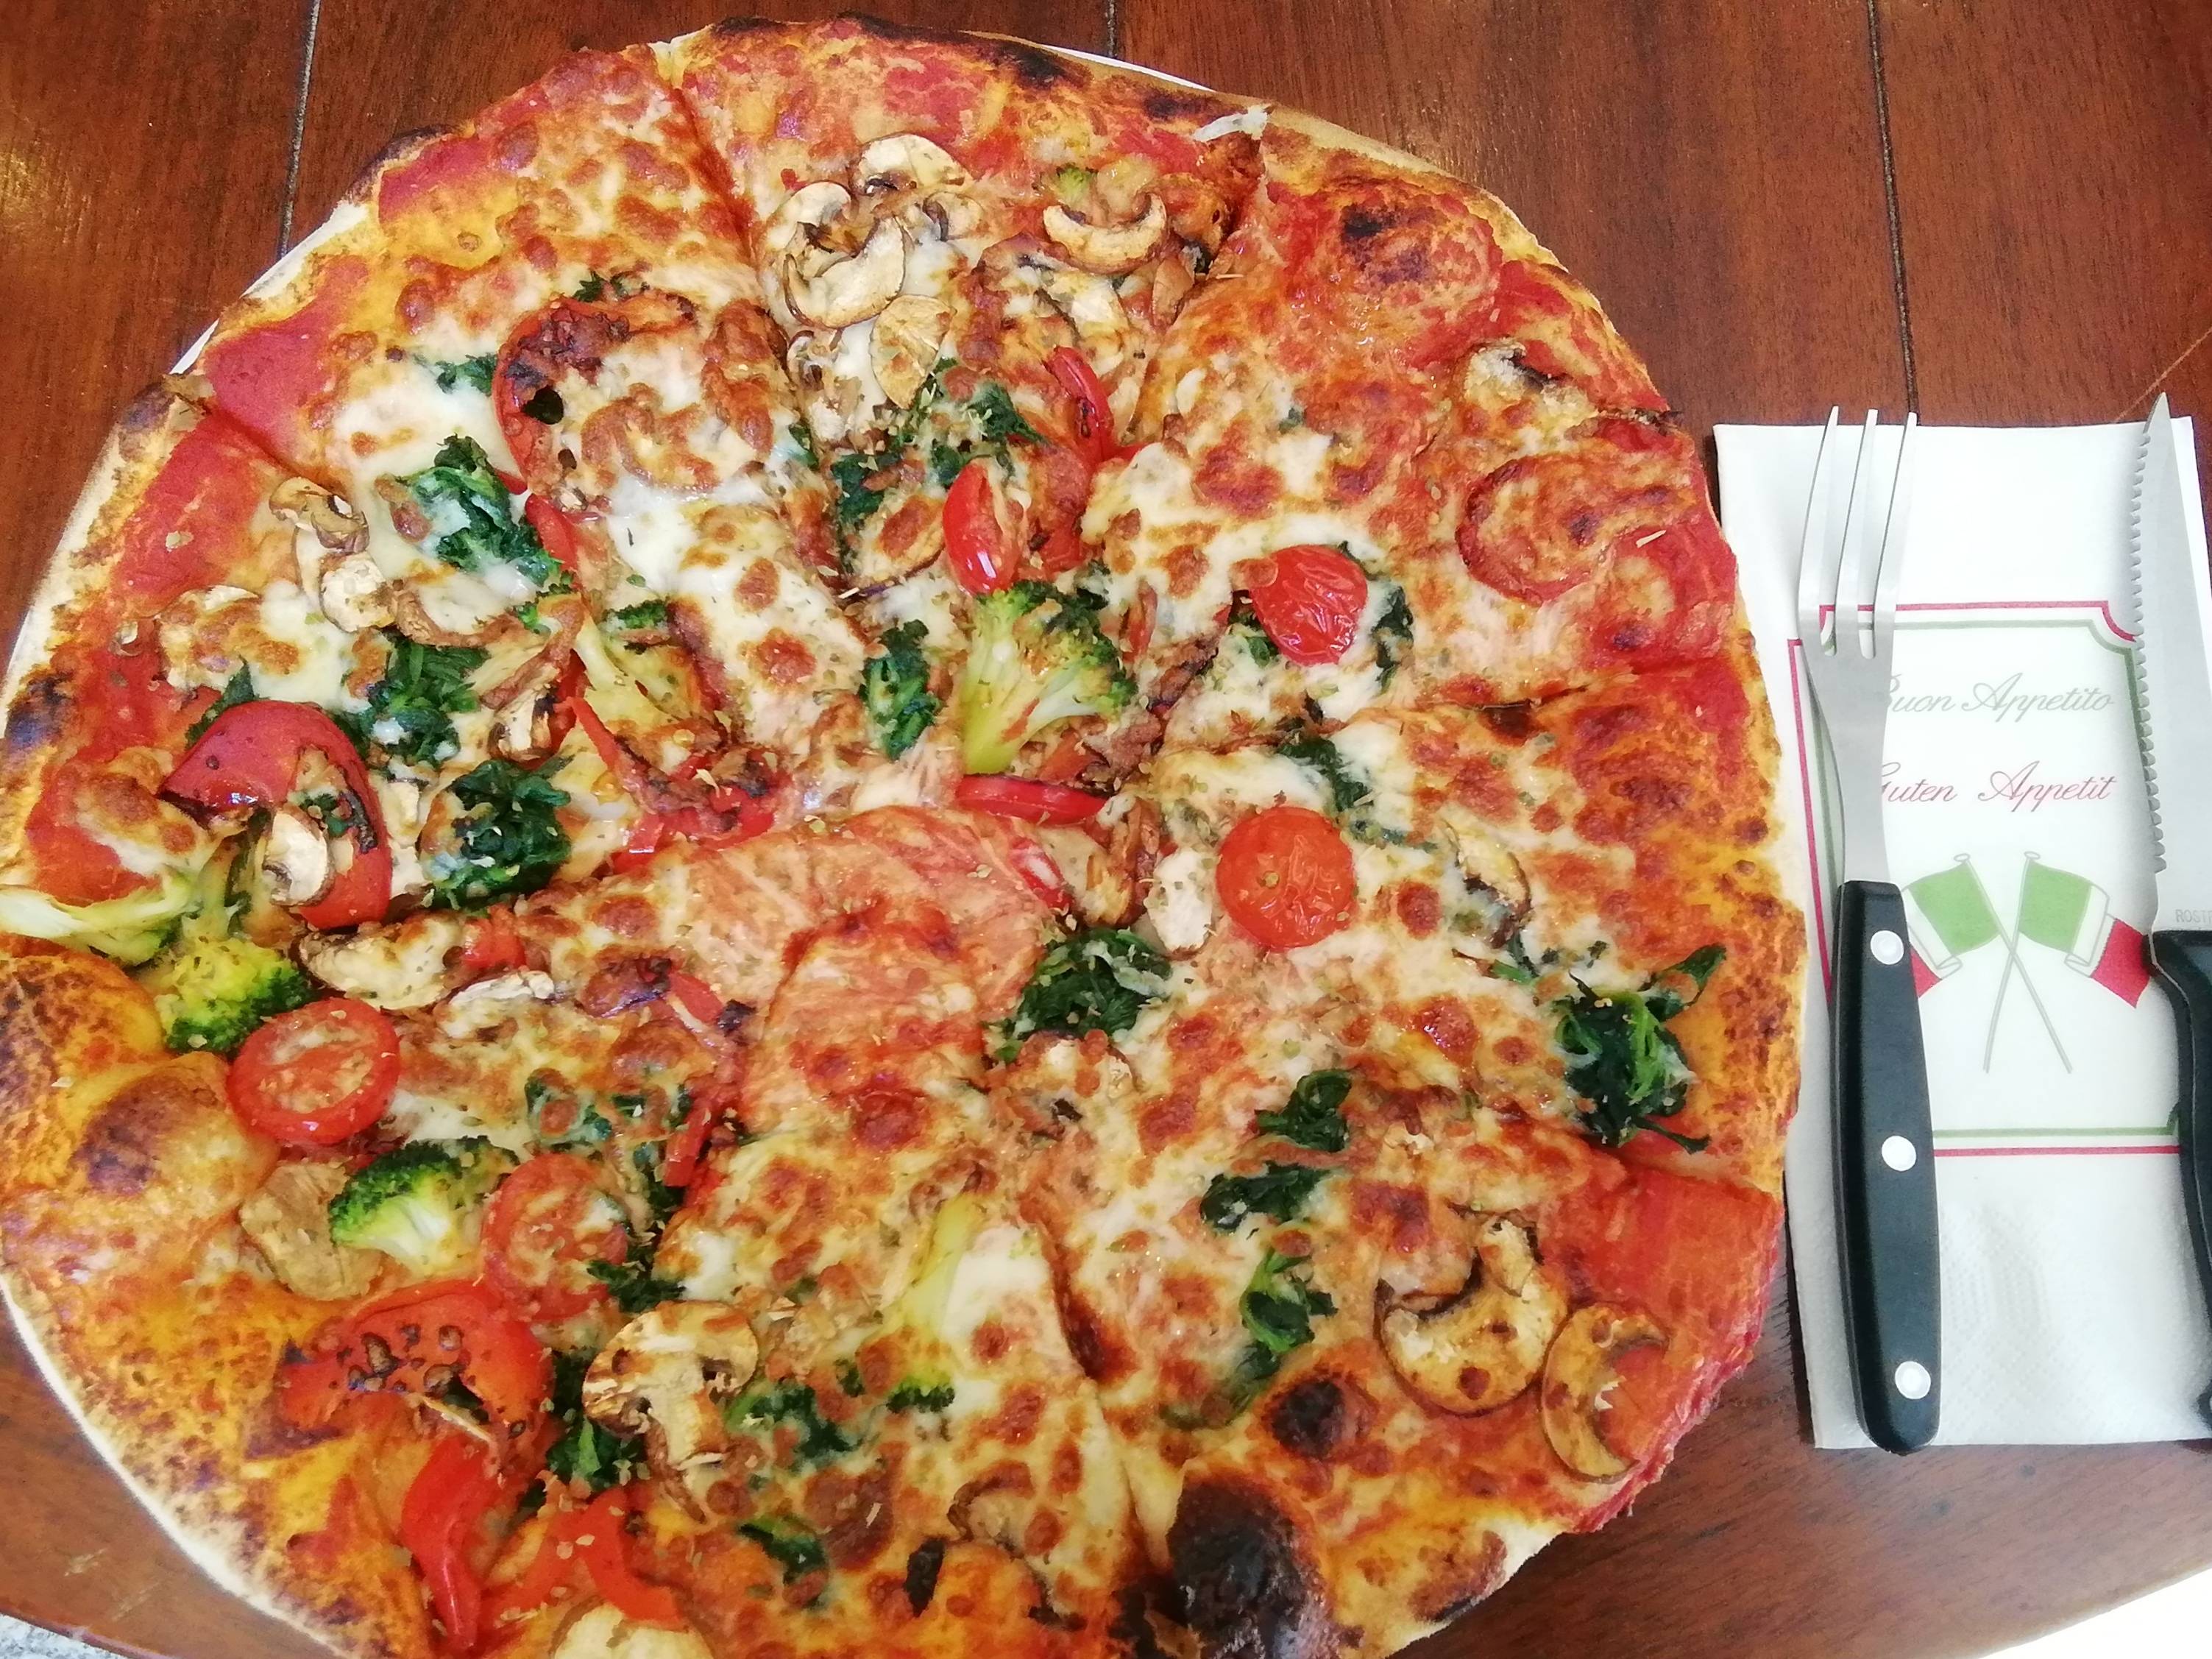 Pizza Vegetariano (9,-)